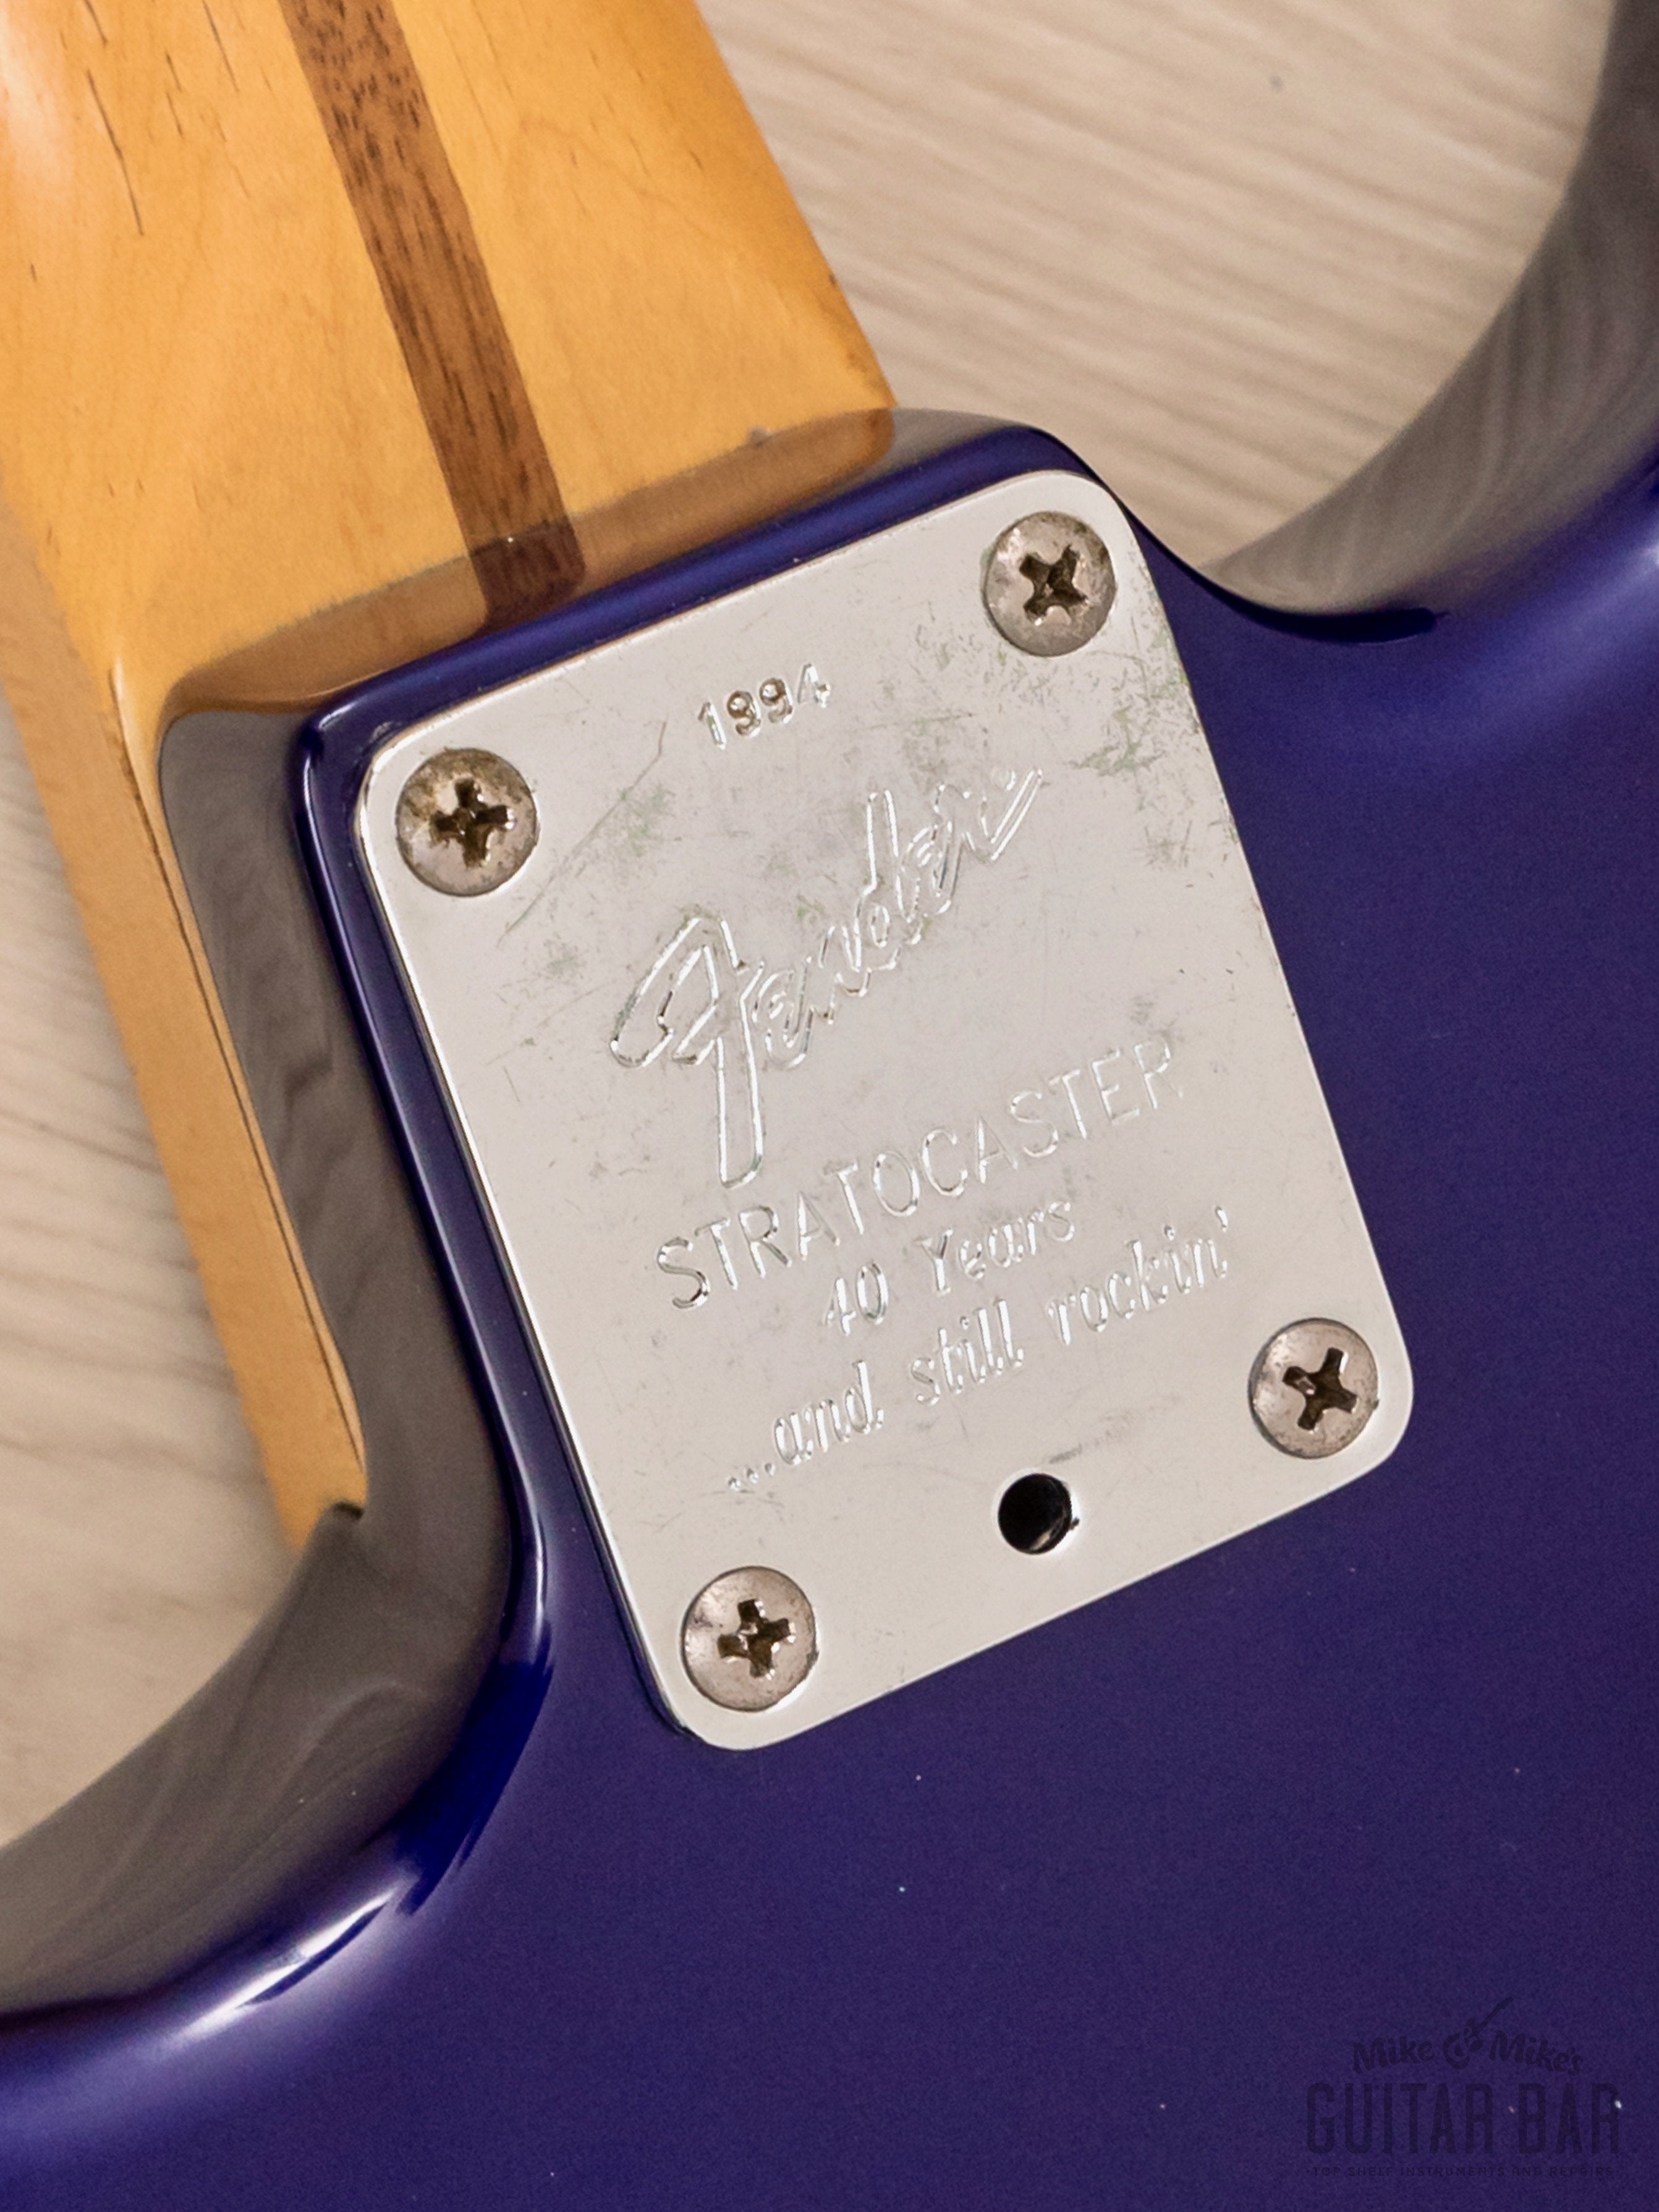 1994 Fender 40th Anniversary American Standard Stratocaster Midnight Blue